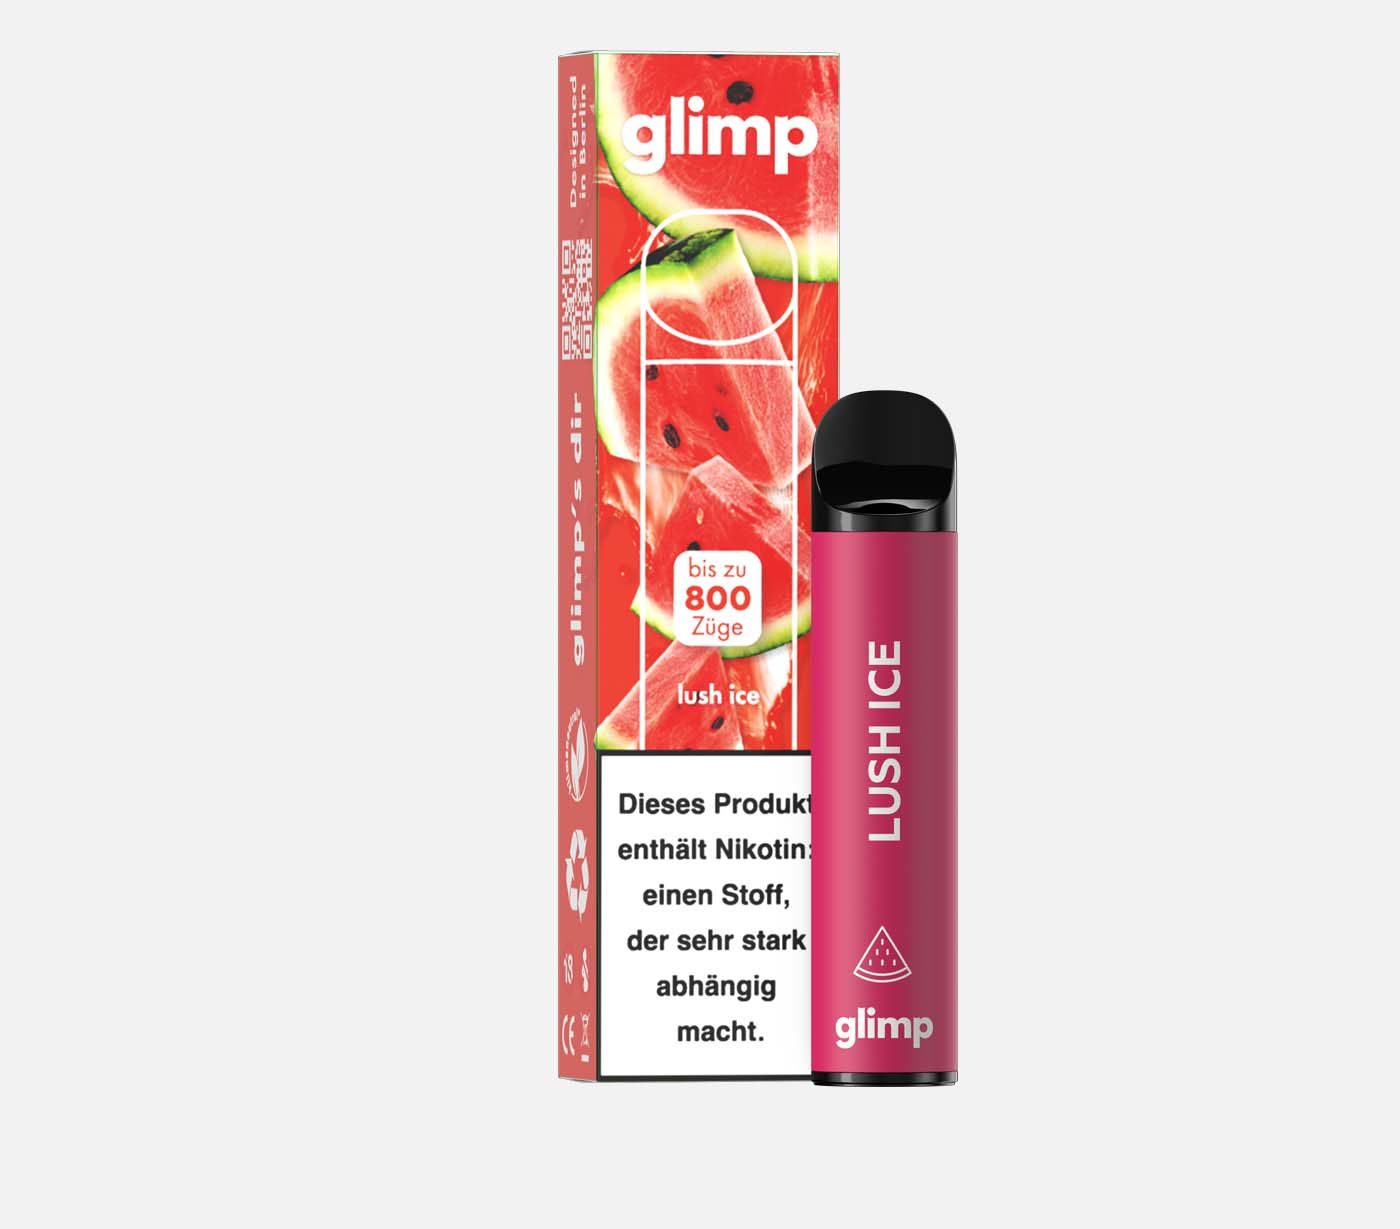 GLIMP 800 watermelon lush ice